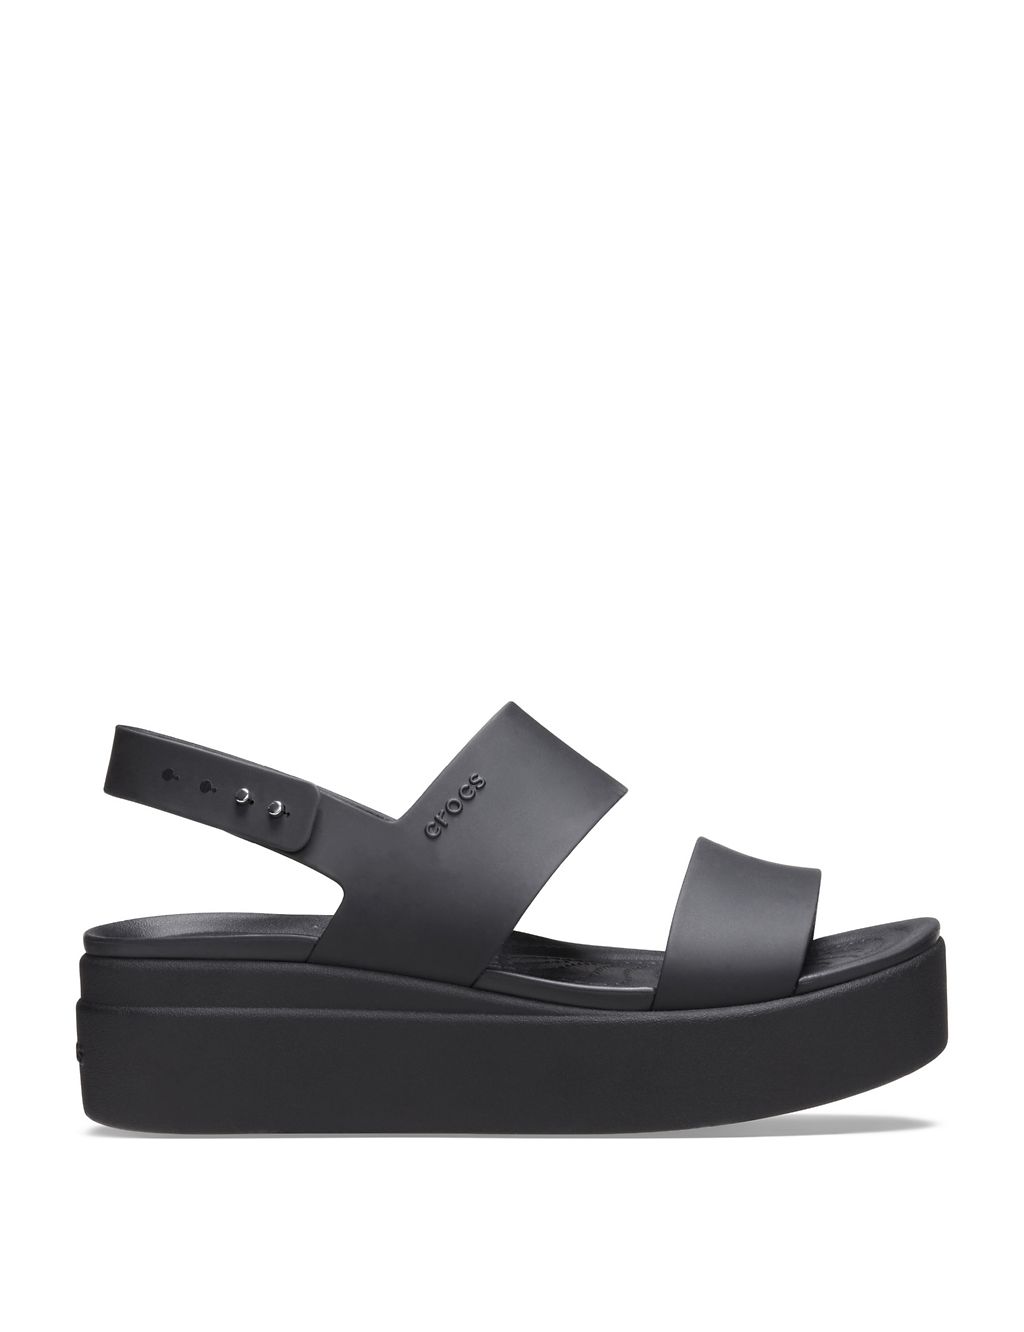 Brooklyn Wedge Sandals | Crocs | M&S